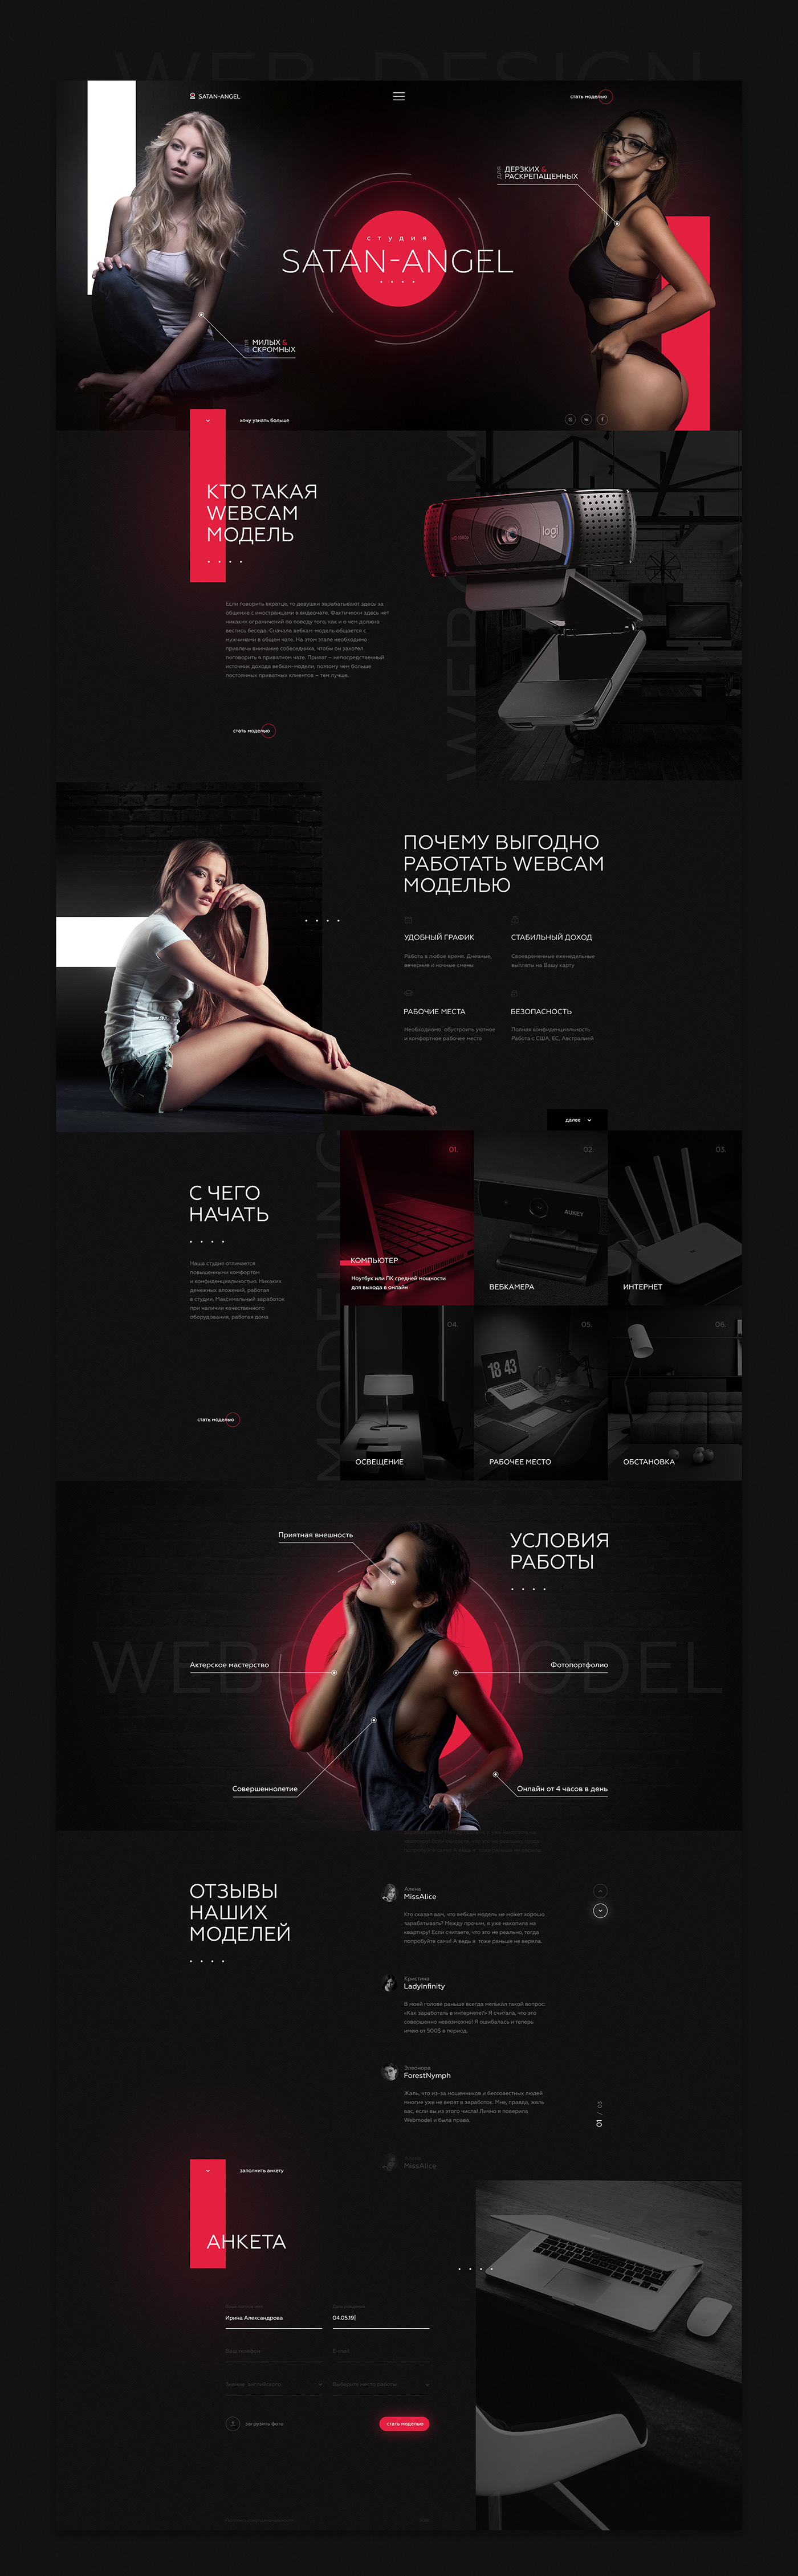 Mẫu thiết kế website Giới thiệu công ty - Marketing - Sale - Agency - Studio 05  behance/gallery/81864761/Landing-Page-WebCam-models-studio